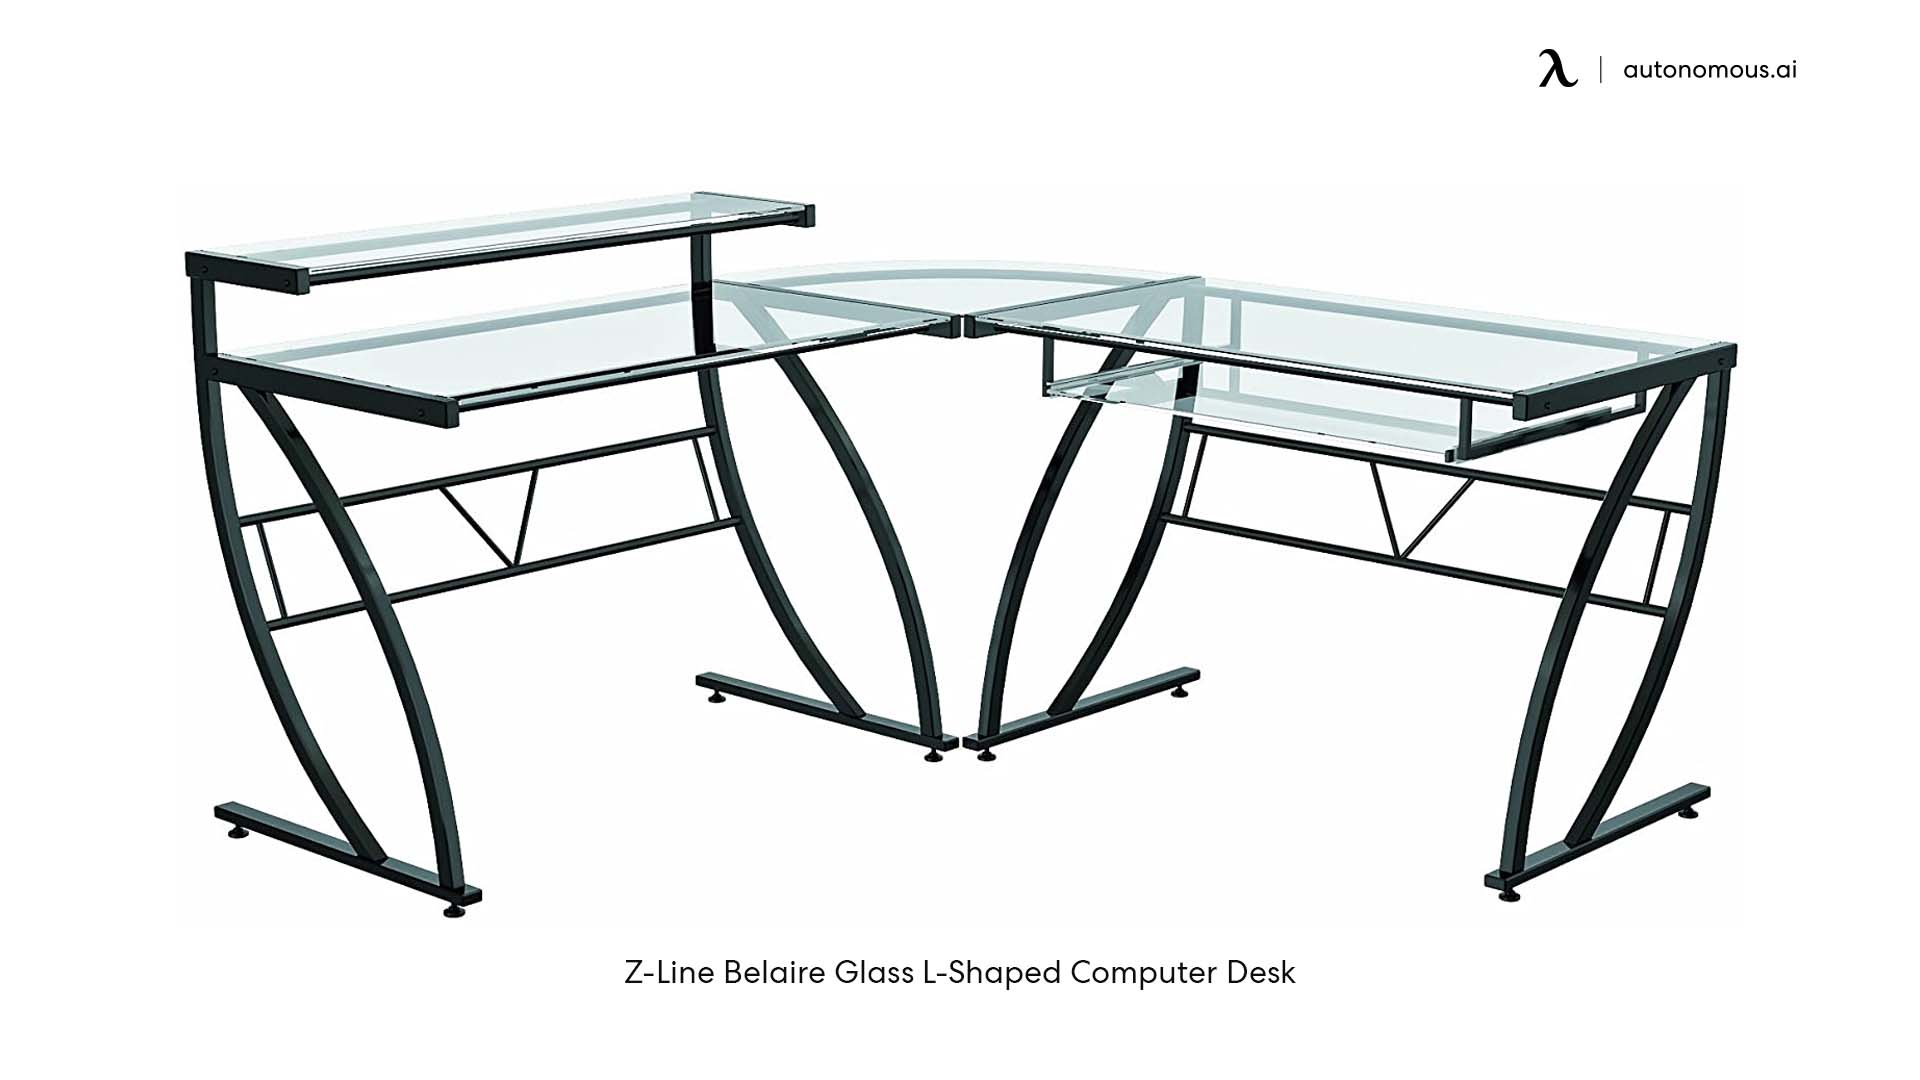 Z-Line Belaire Glass L-Shaped Computer Desk